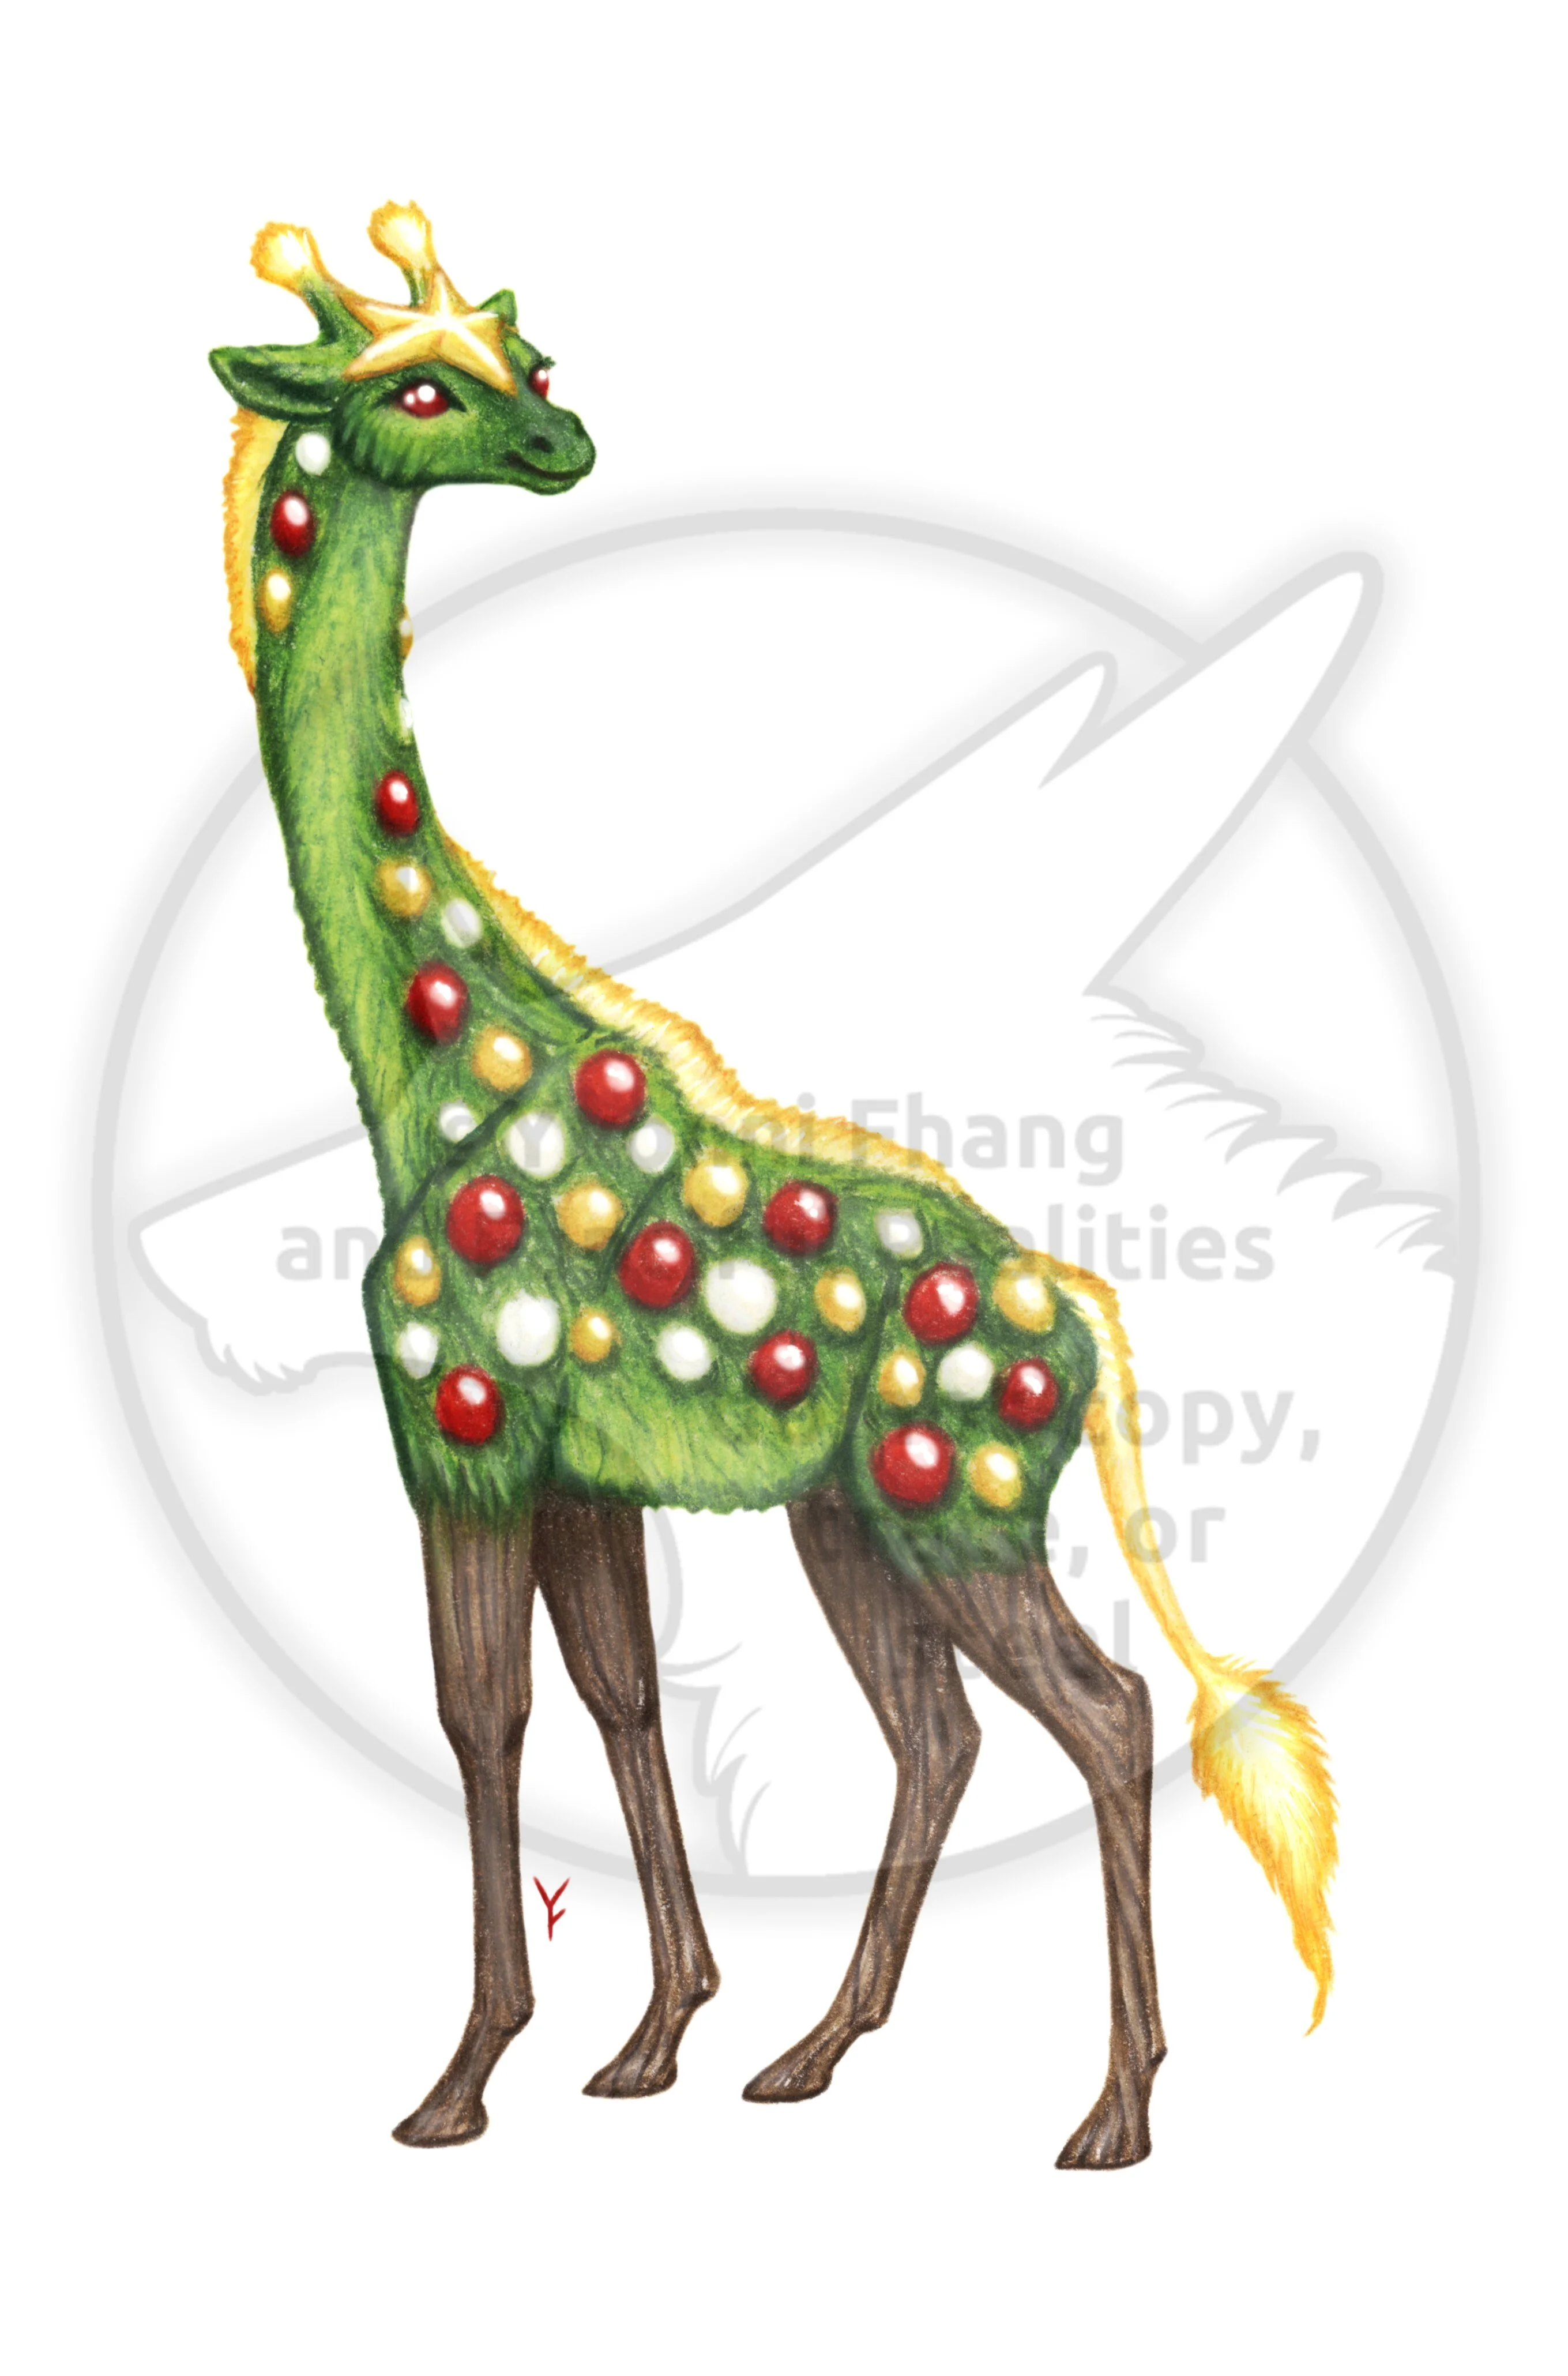 A holiday hybrid, a cute giraffe and a festive Christmas tree!